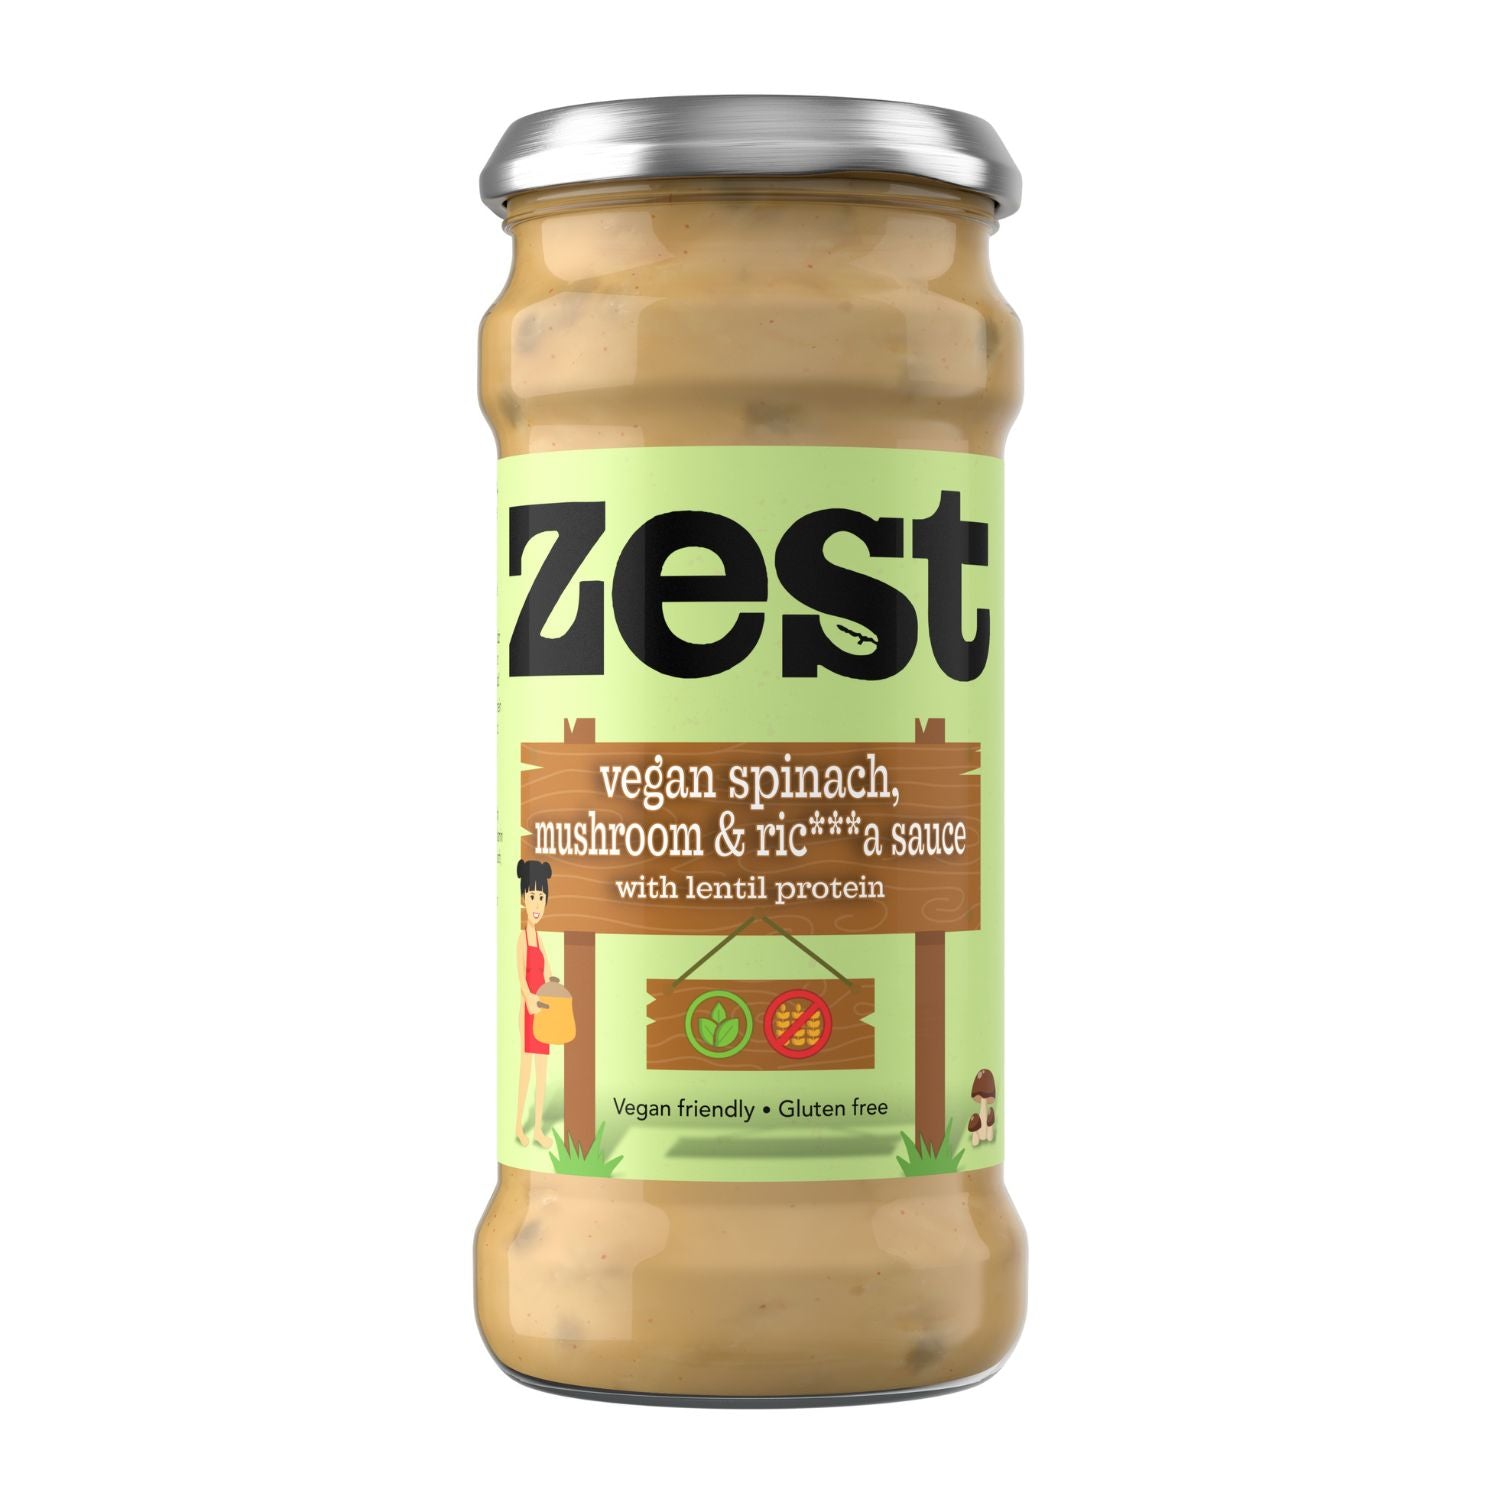 Zest Vegan Spinach, Mushroom & Ric***ta Sauce (340g)